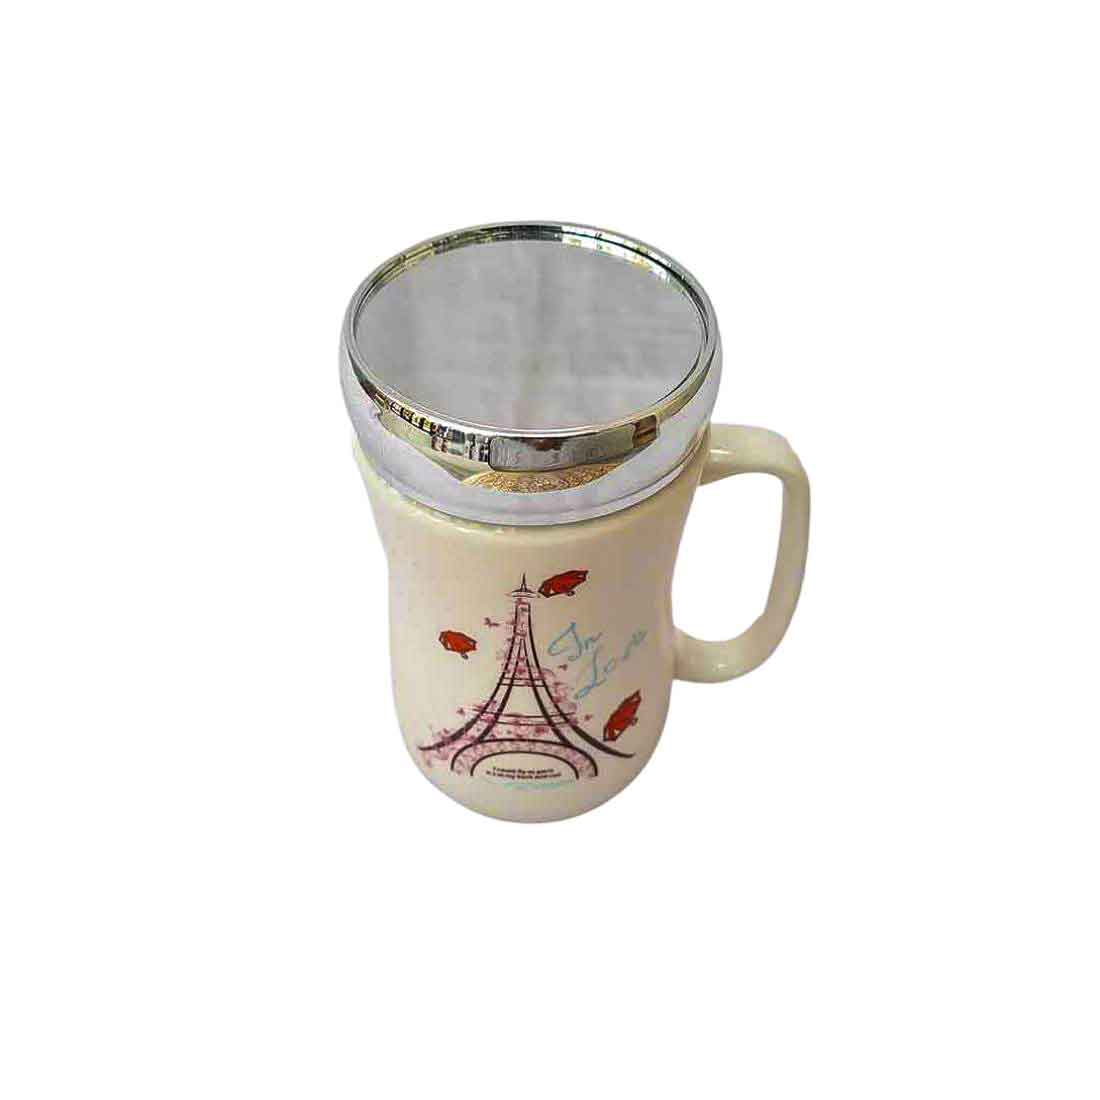 Coffee Mug - Love You Mug - For Anniversary & Valentines Day Gift - ApkaMart